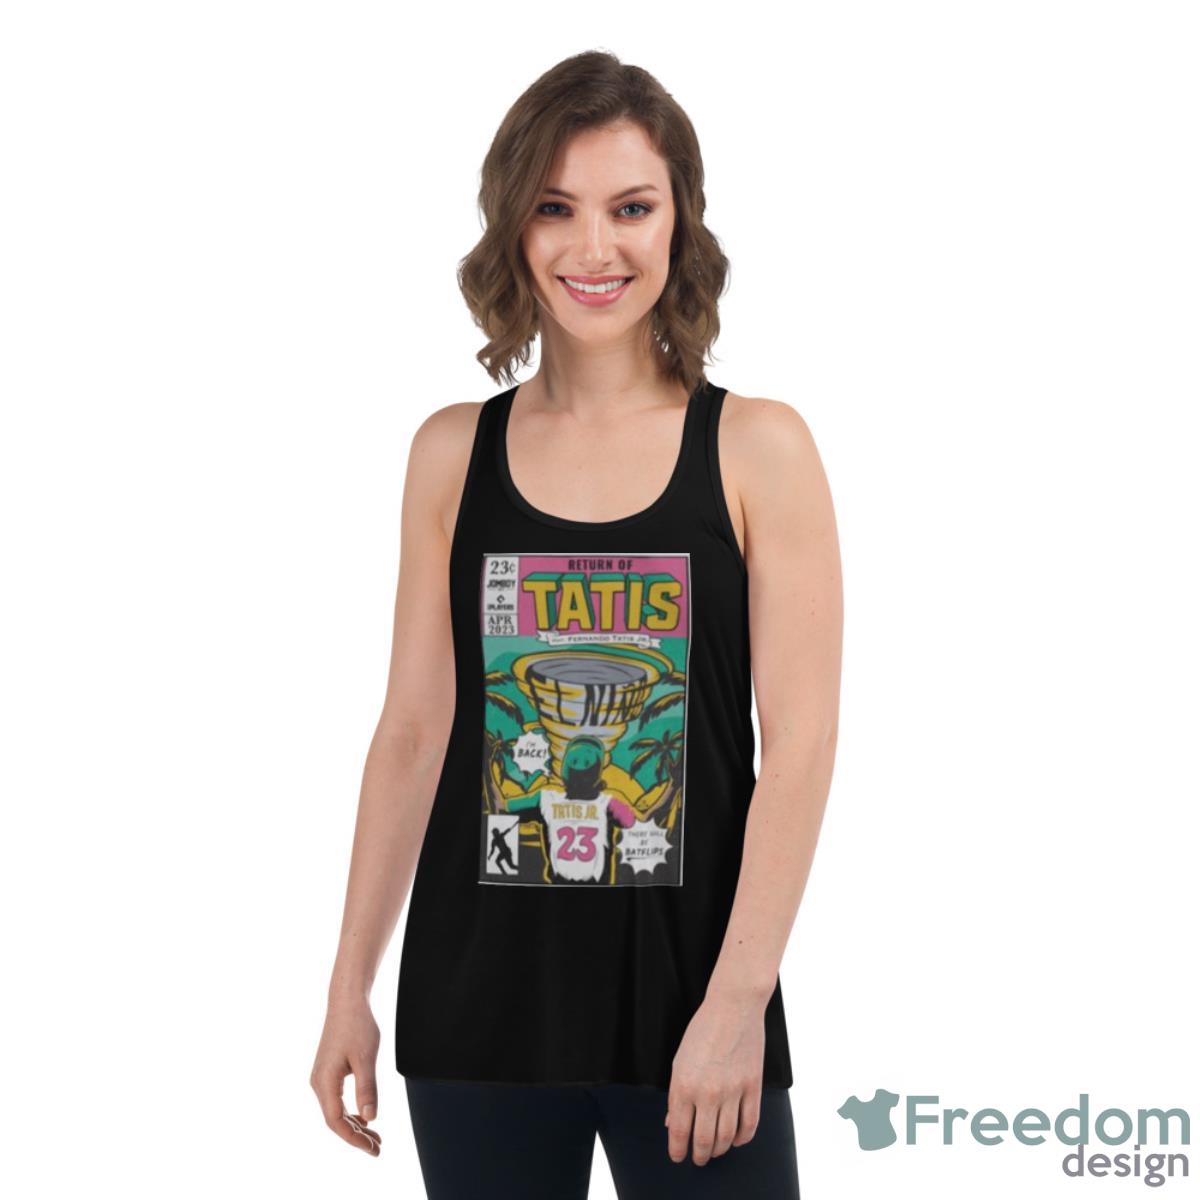 Return Of Tatis Feat Fernando Tatis Jr Shirt - Freedomdesign